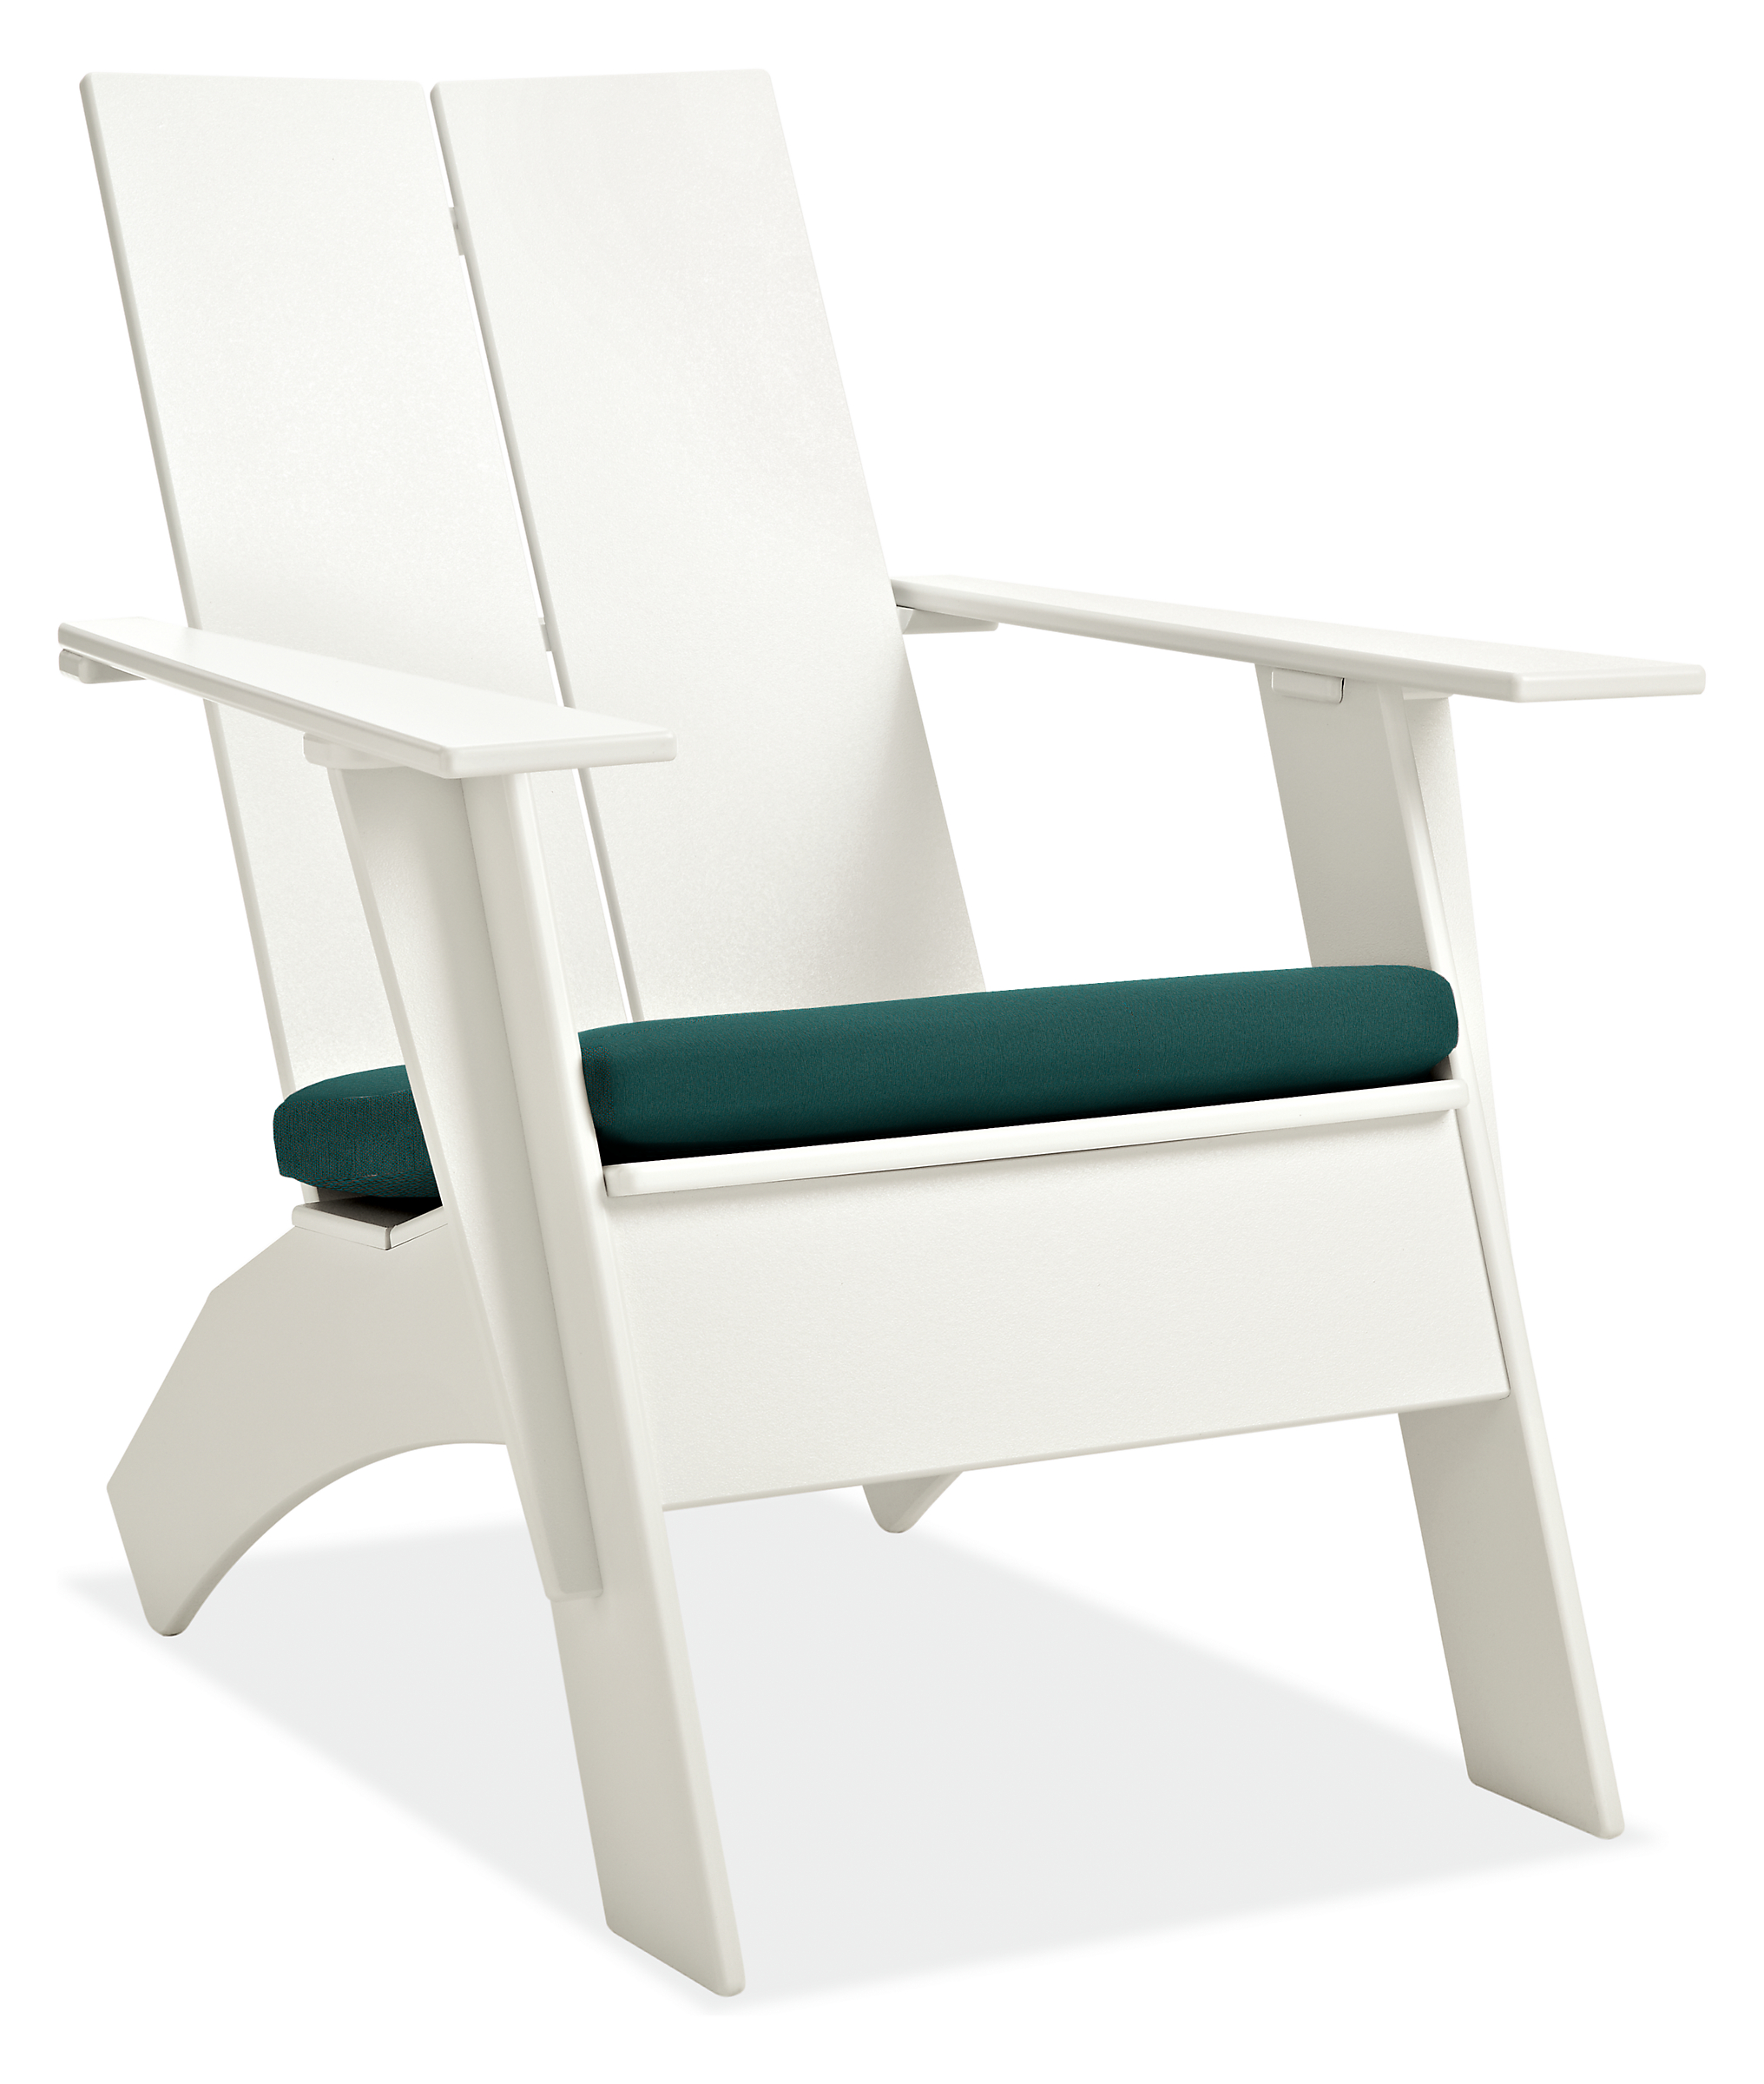 Emmet Seat Cushion for Lounge Chair/Rocker